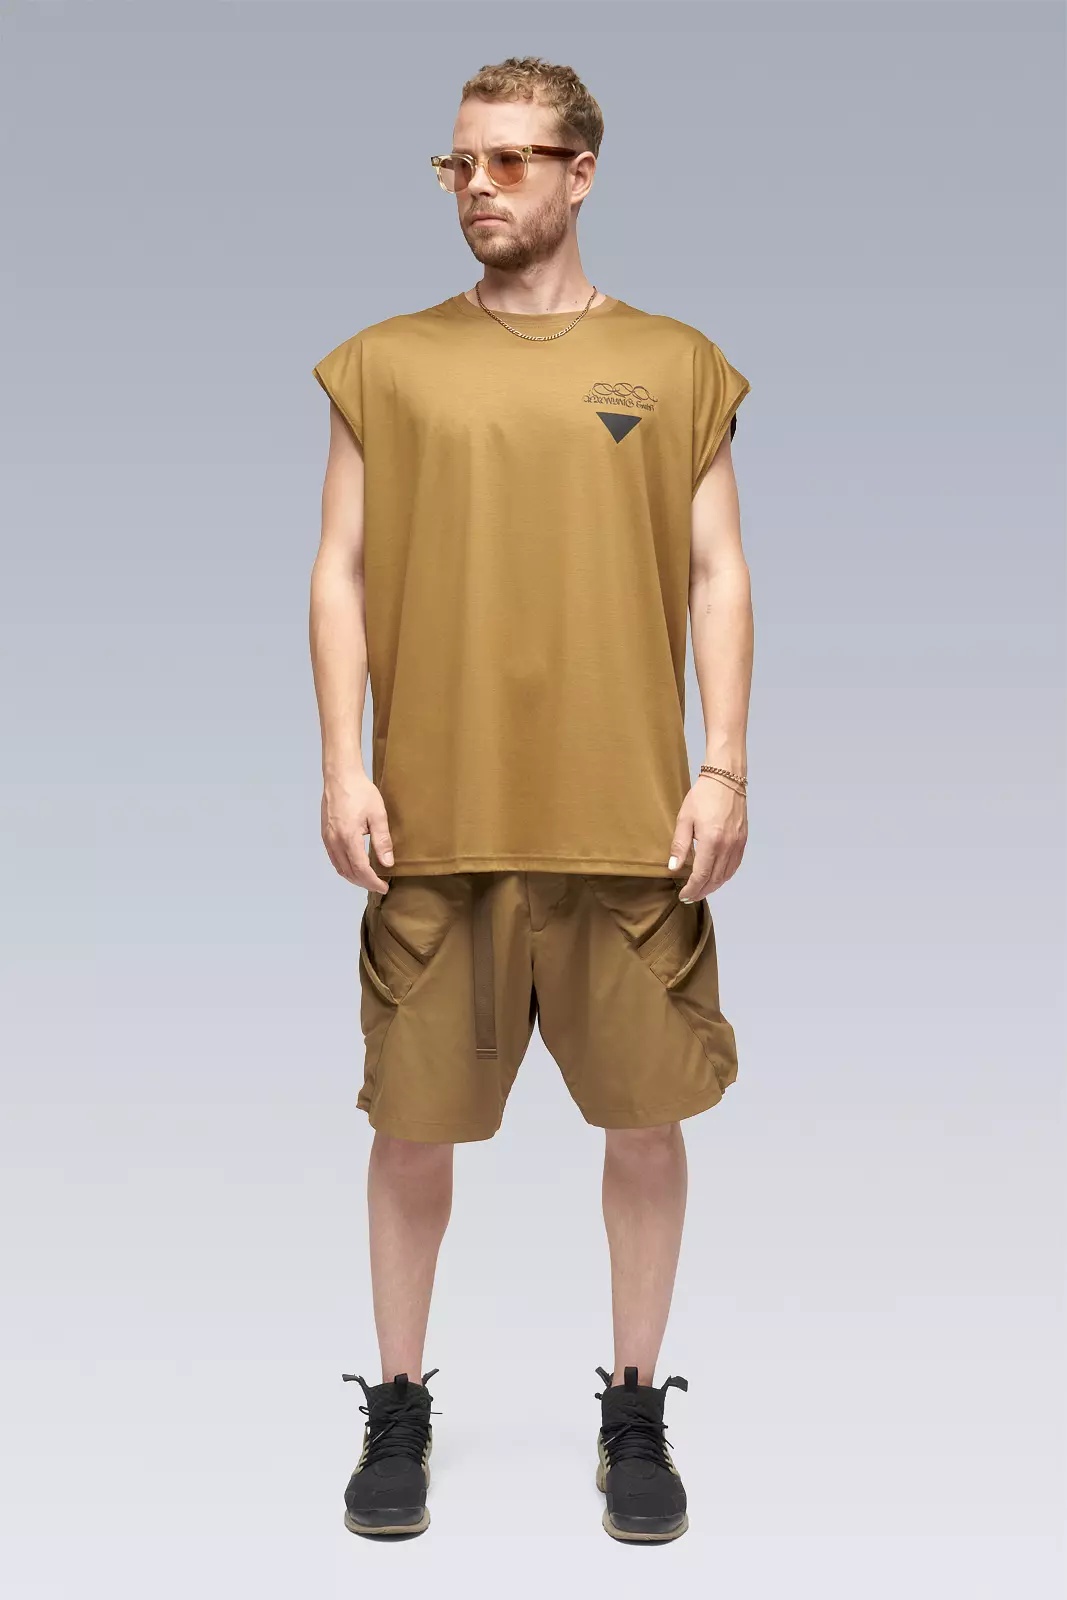 S25-PR-A 100% Cotton Mercerized Sleeveless T-shirt Coyote - 8